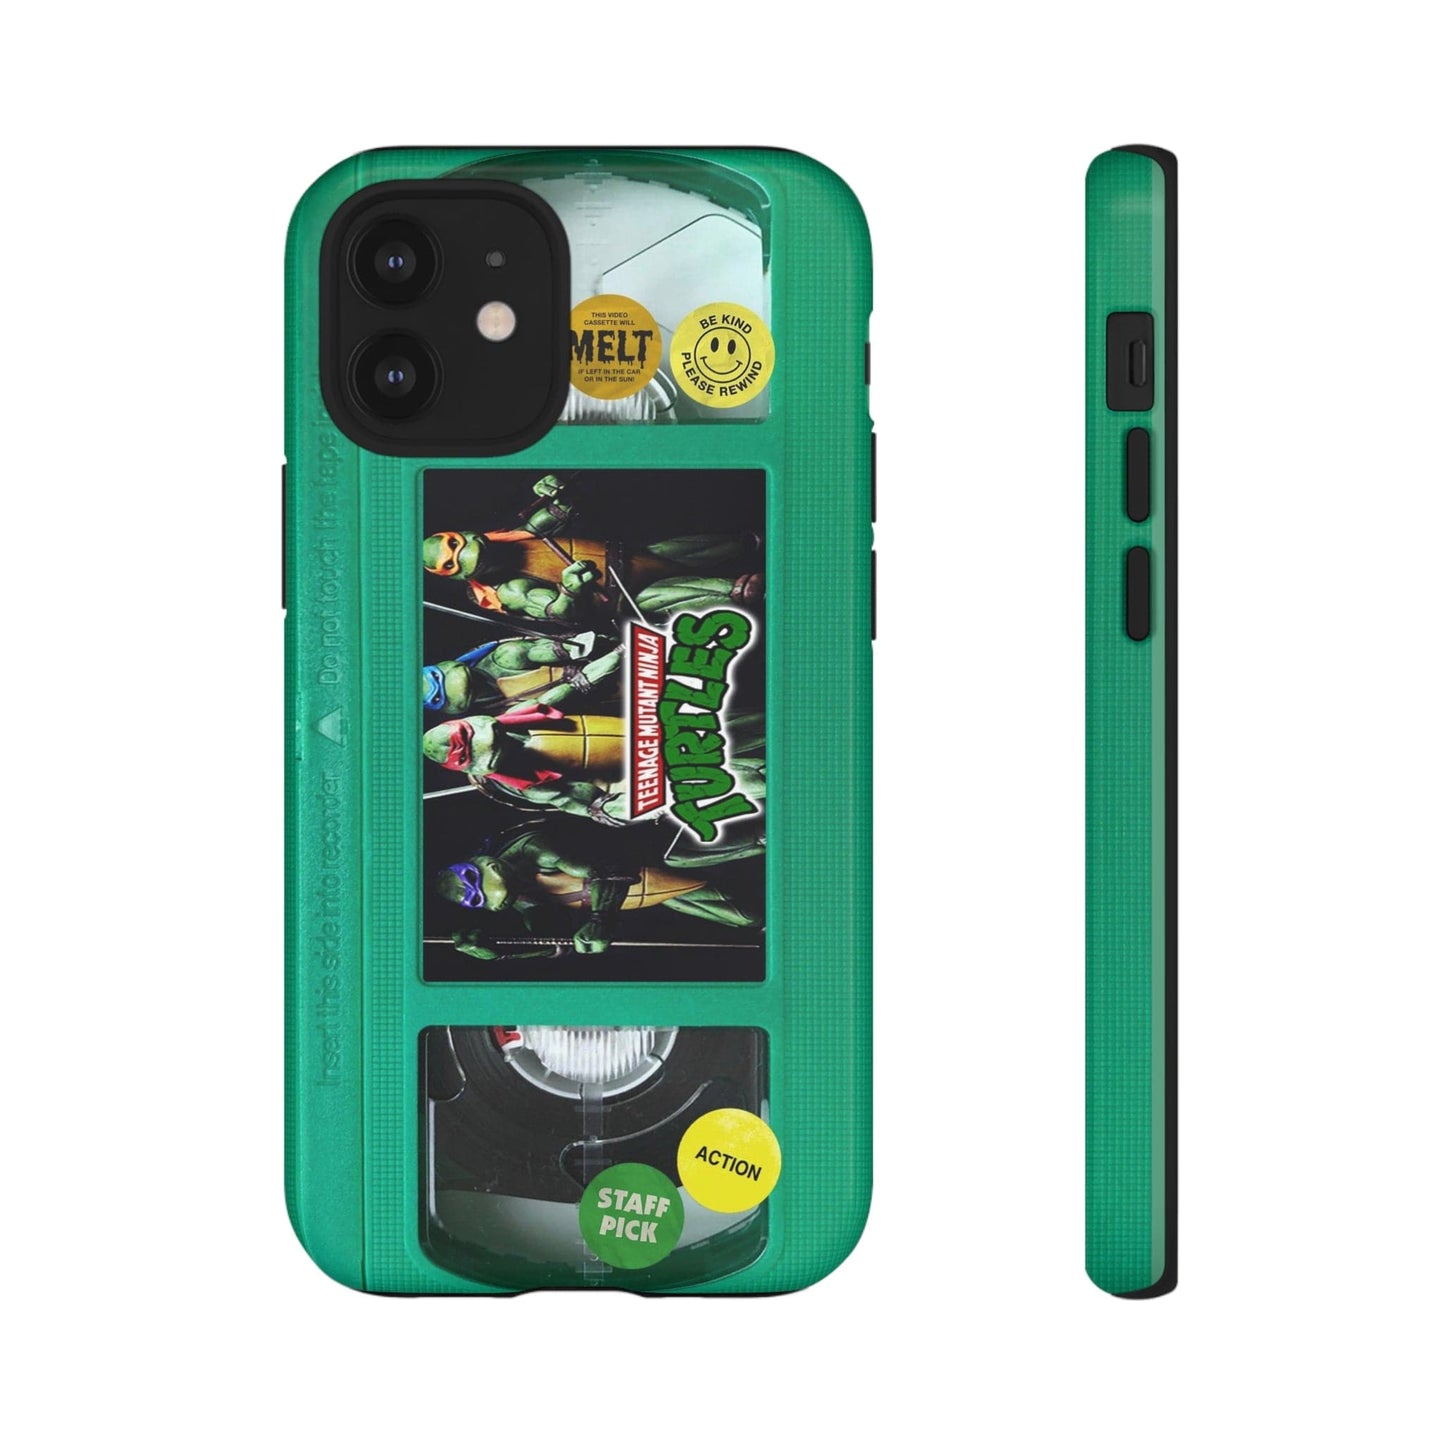 Teenage Turtles Green Impact Resistant VHS Phone Case